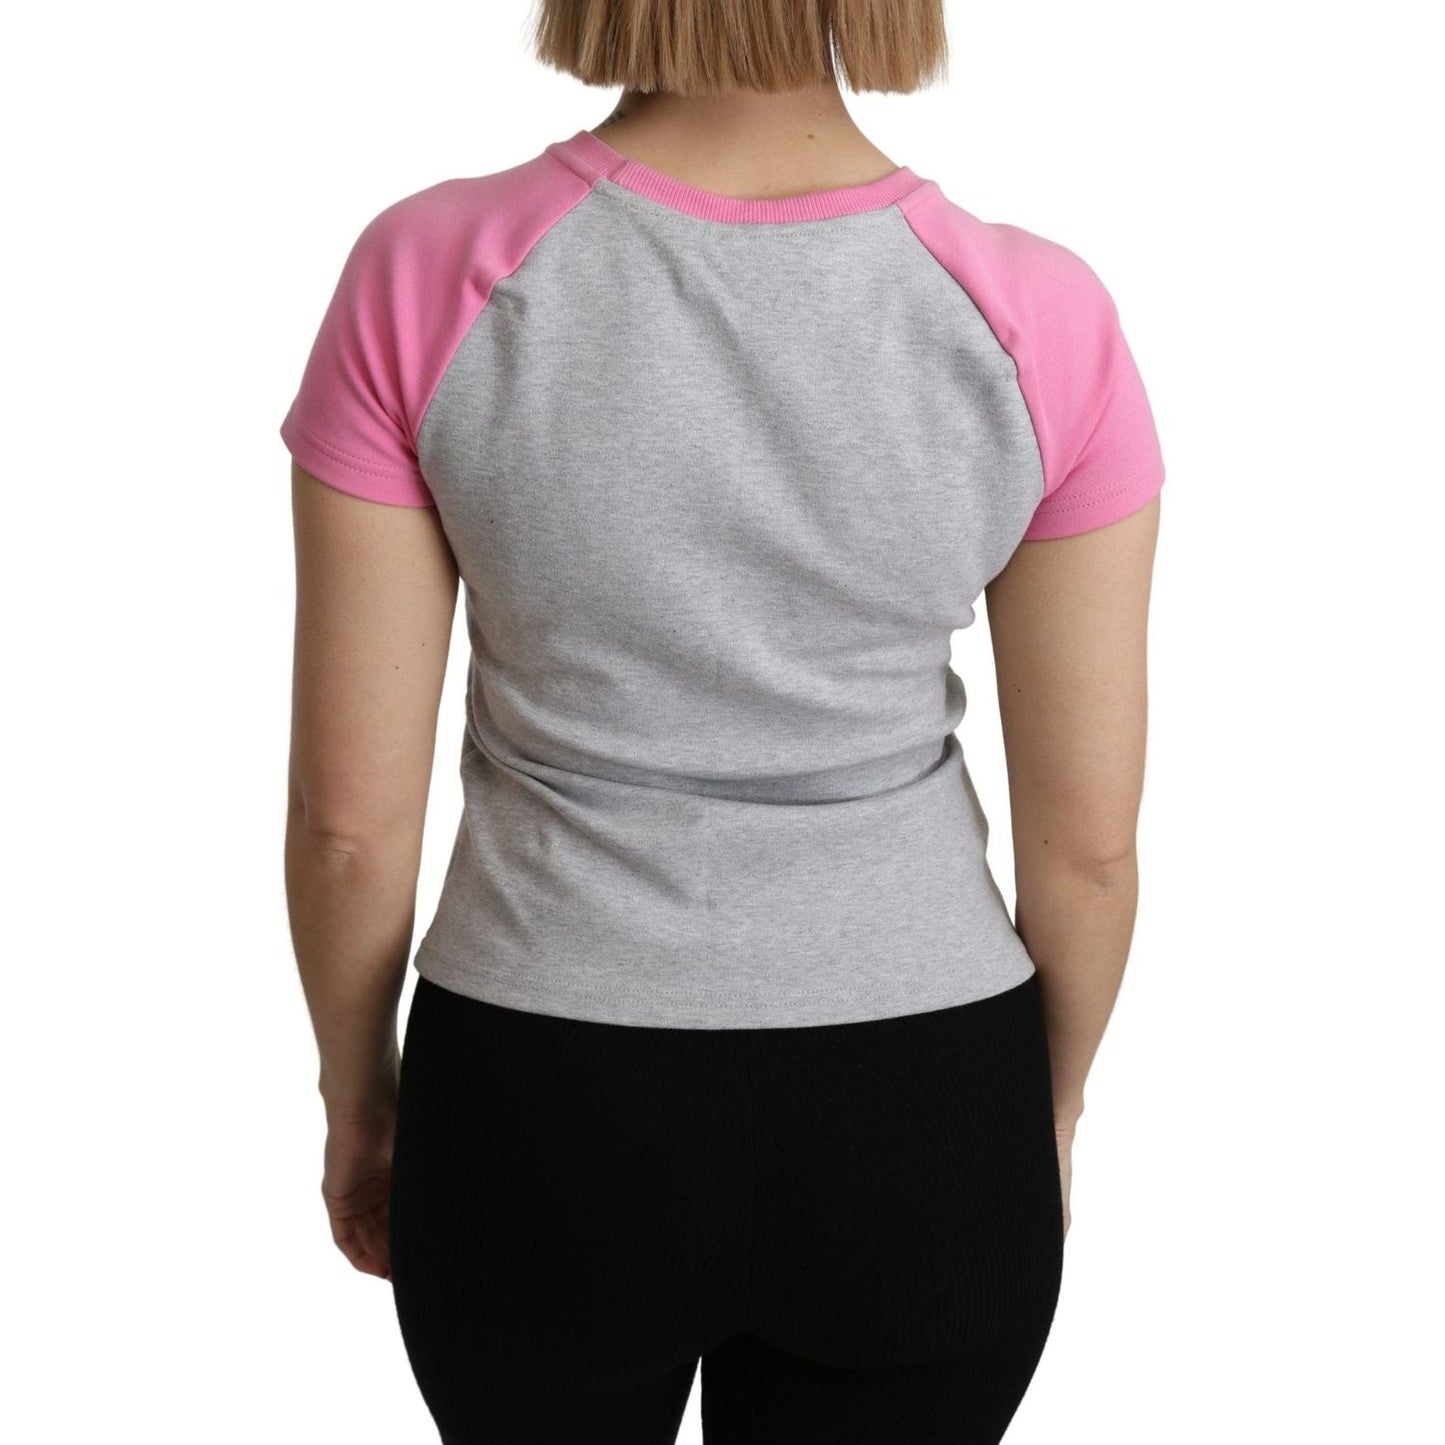 Moschino Chic Gray Crew Neck Cotton T-shirt with Pink Accents gray-and-pink-cotton-t-shirt-my-little-pony-top